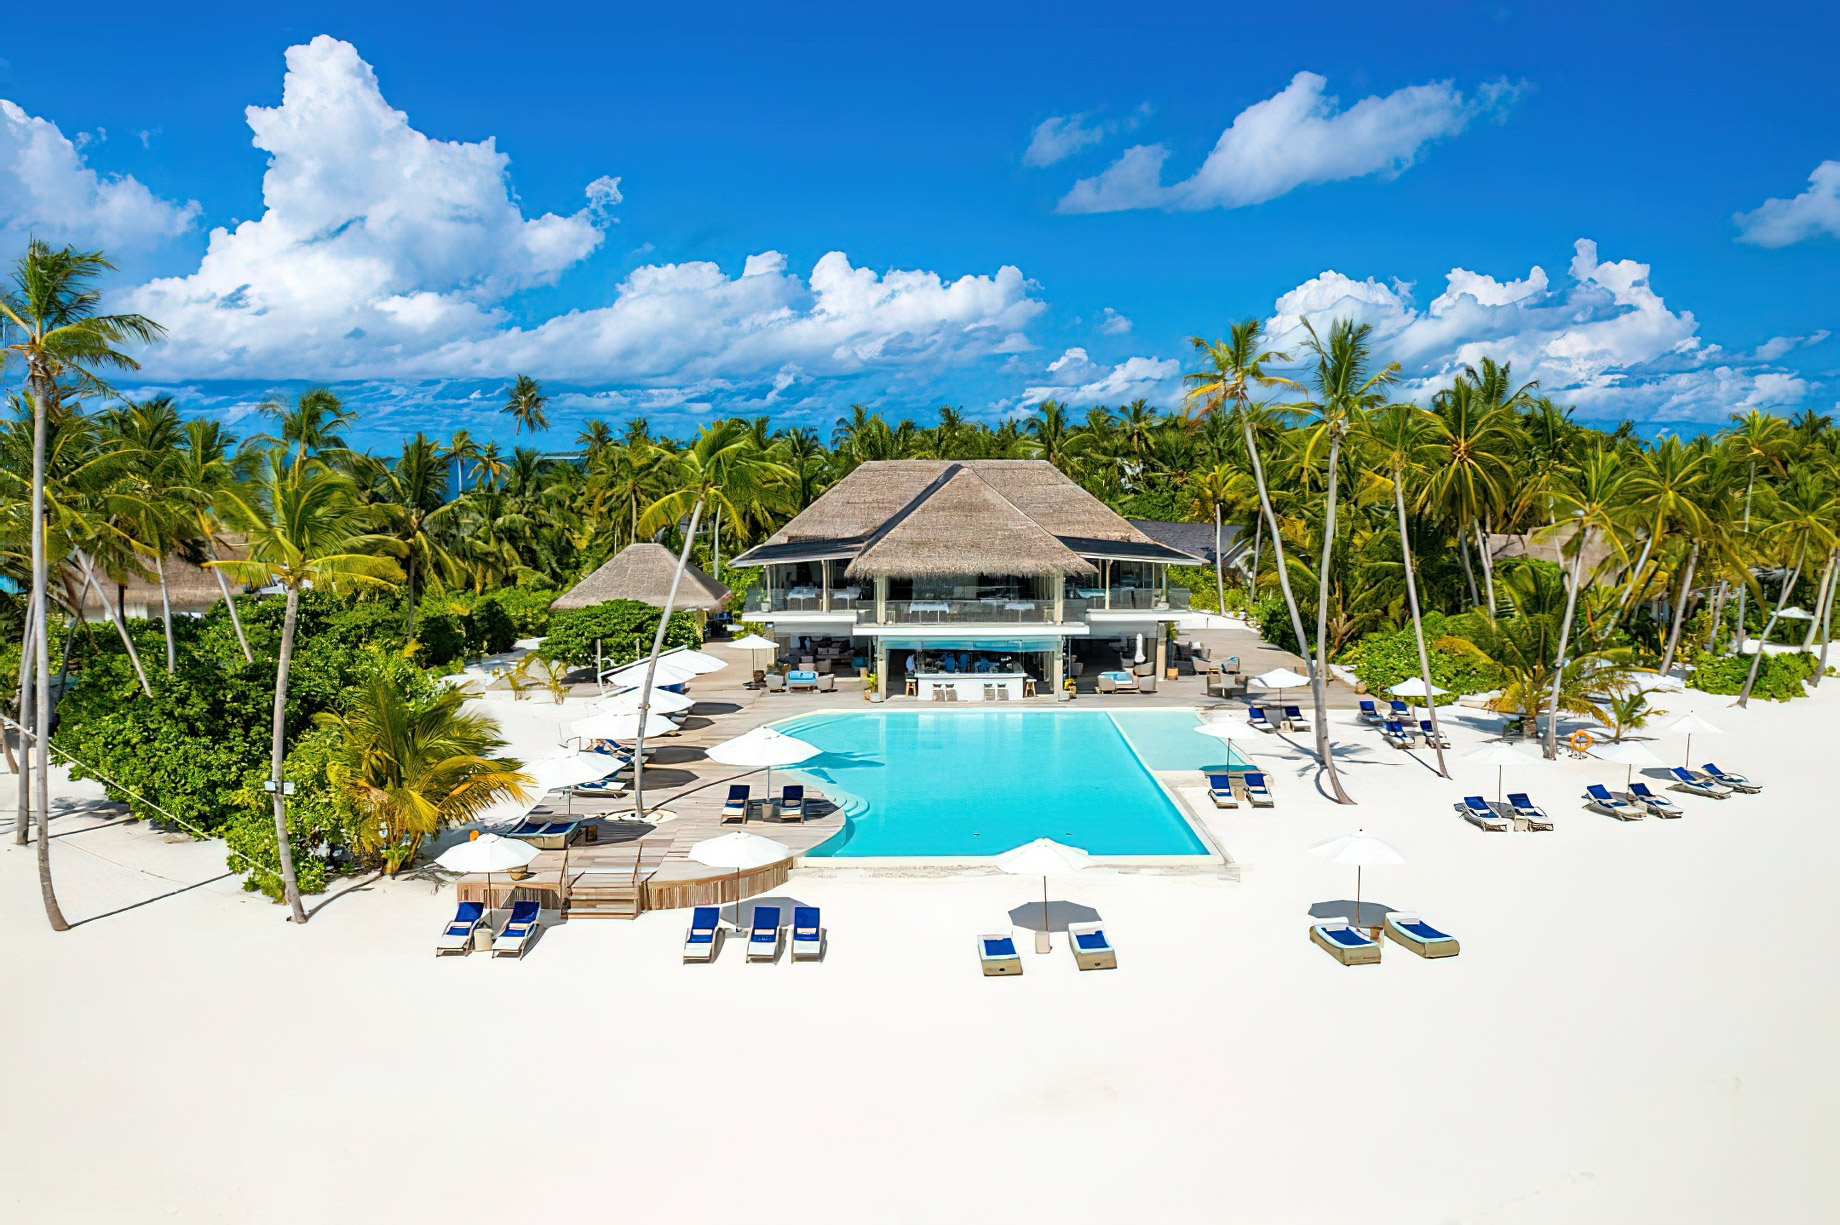 Baglioni Resort Maldives – Maagau Island, Rinbudhoo, Maldives – Resort Main Pool Aerial View